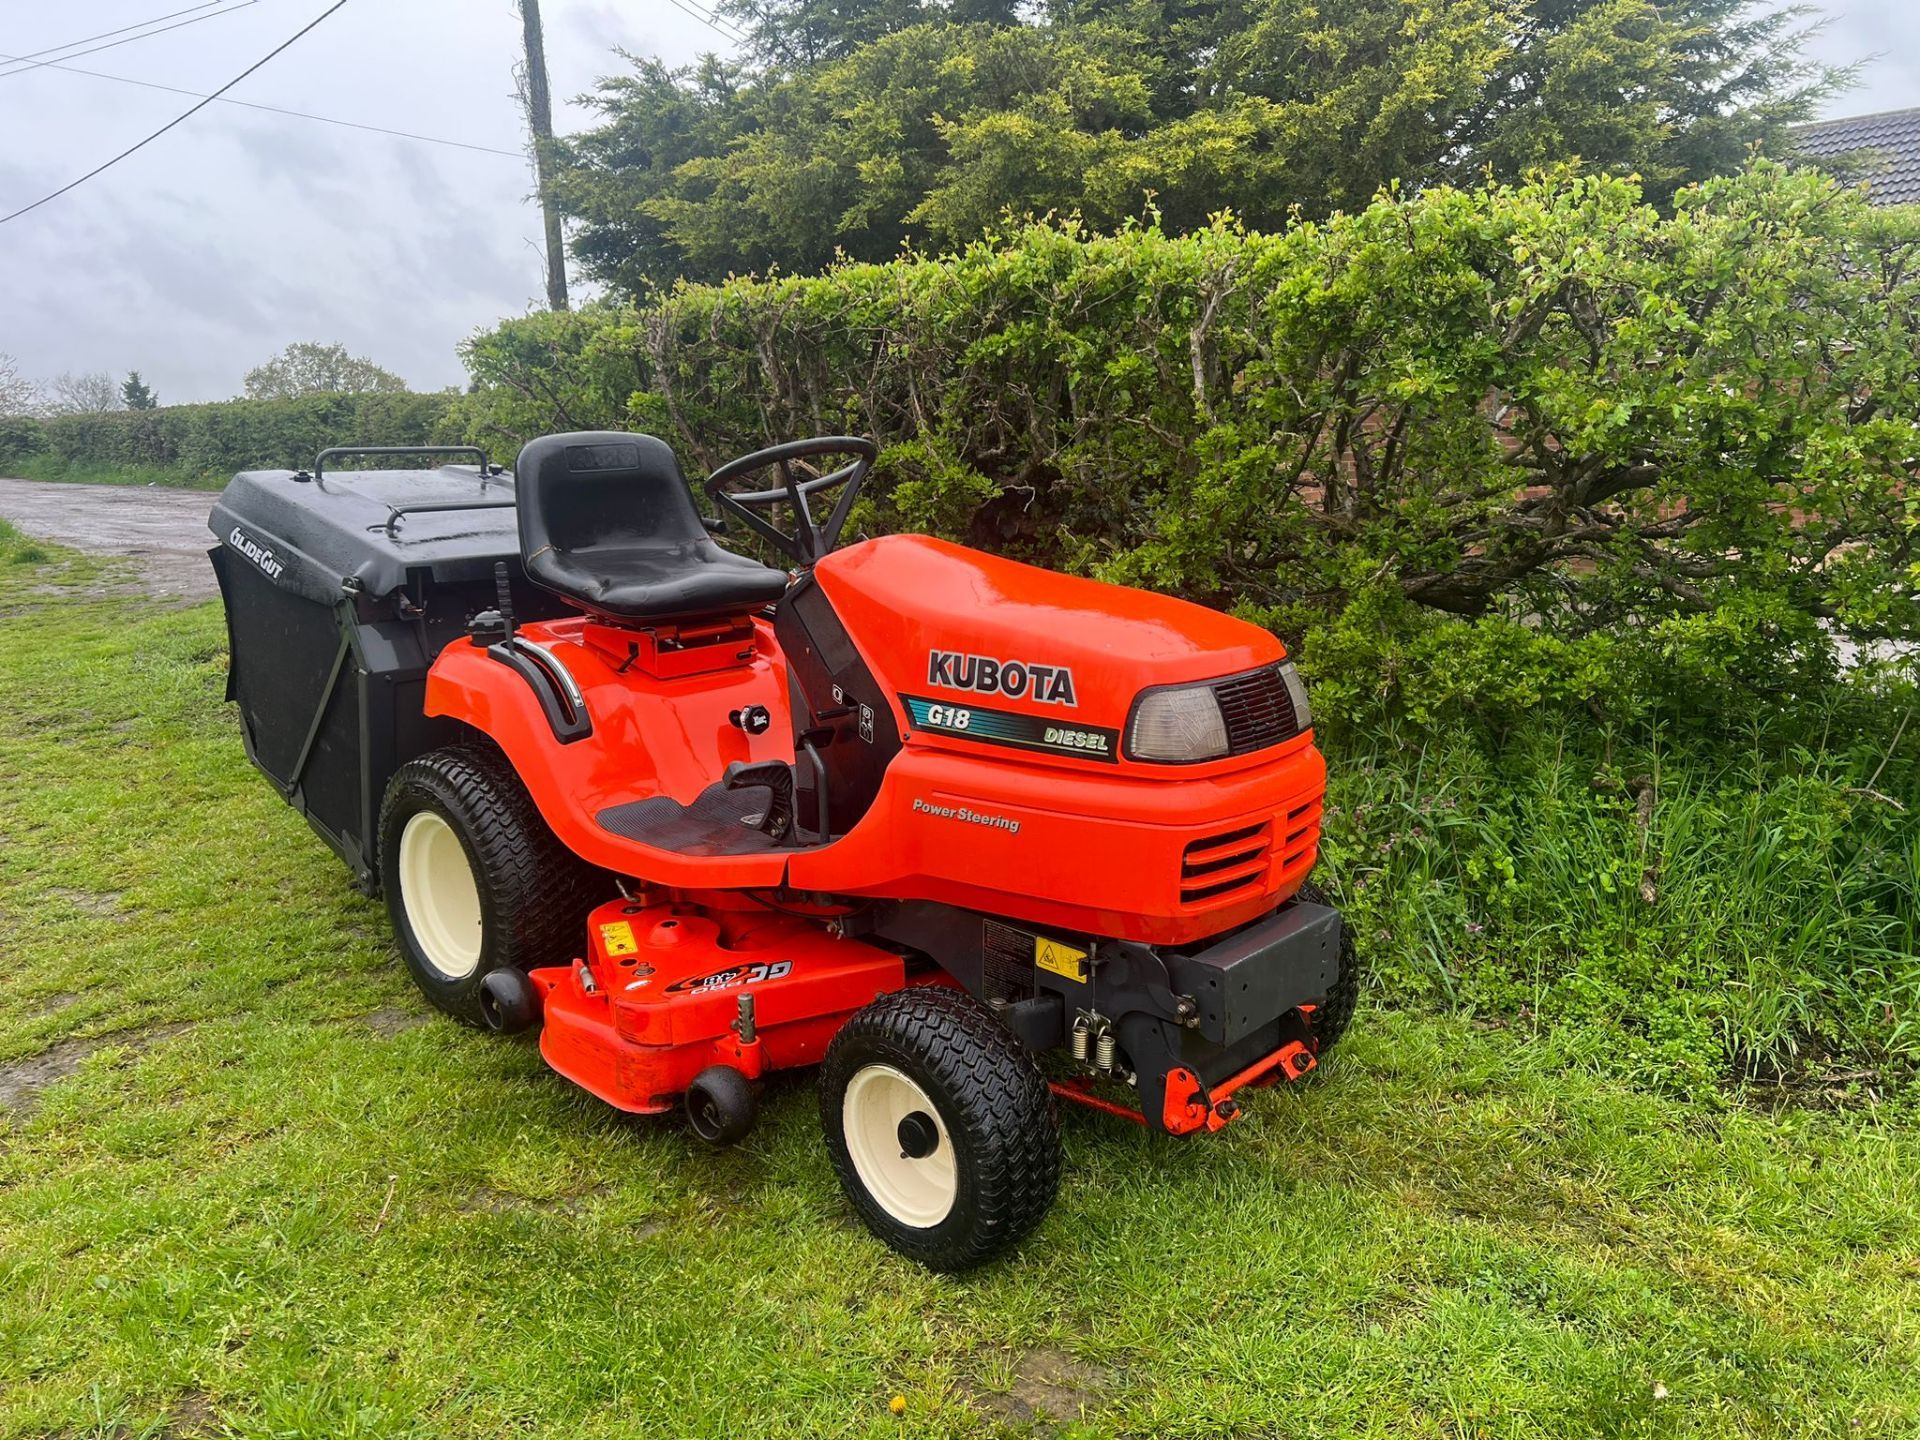 Kubota g18 ride on lawn mower (mint condition) *PLUS VAT* - Image 2 of 26